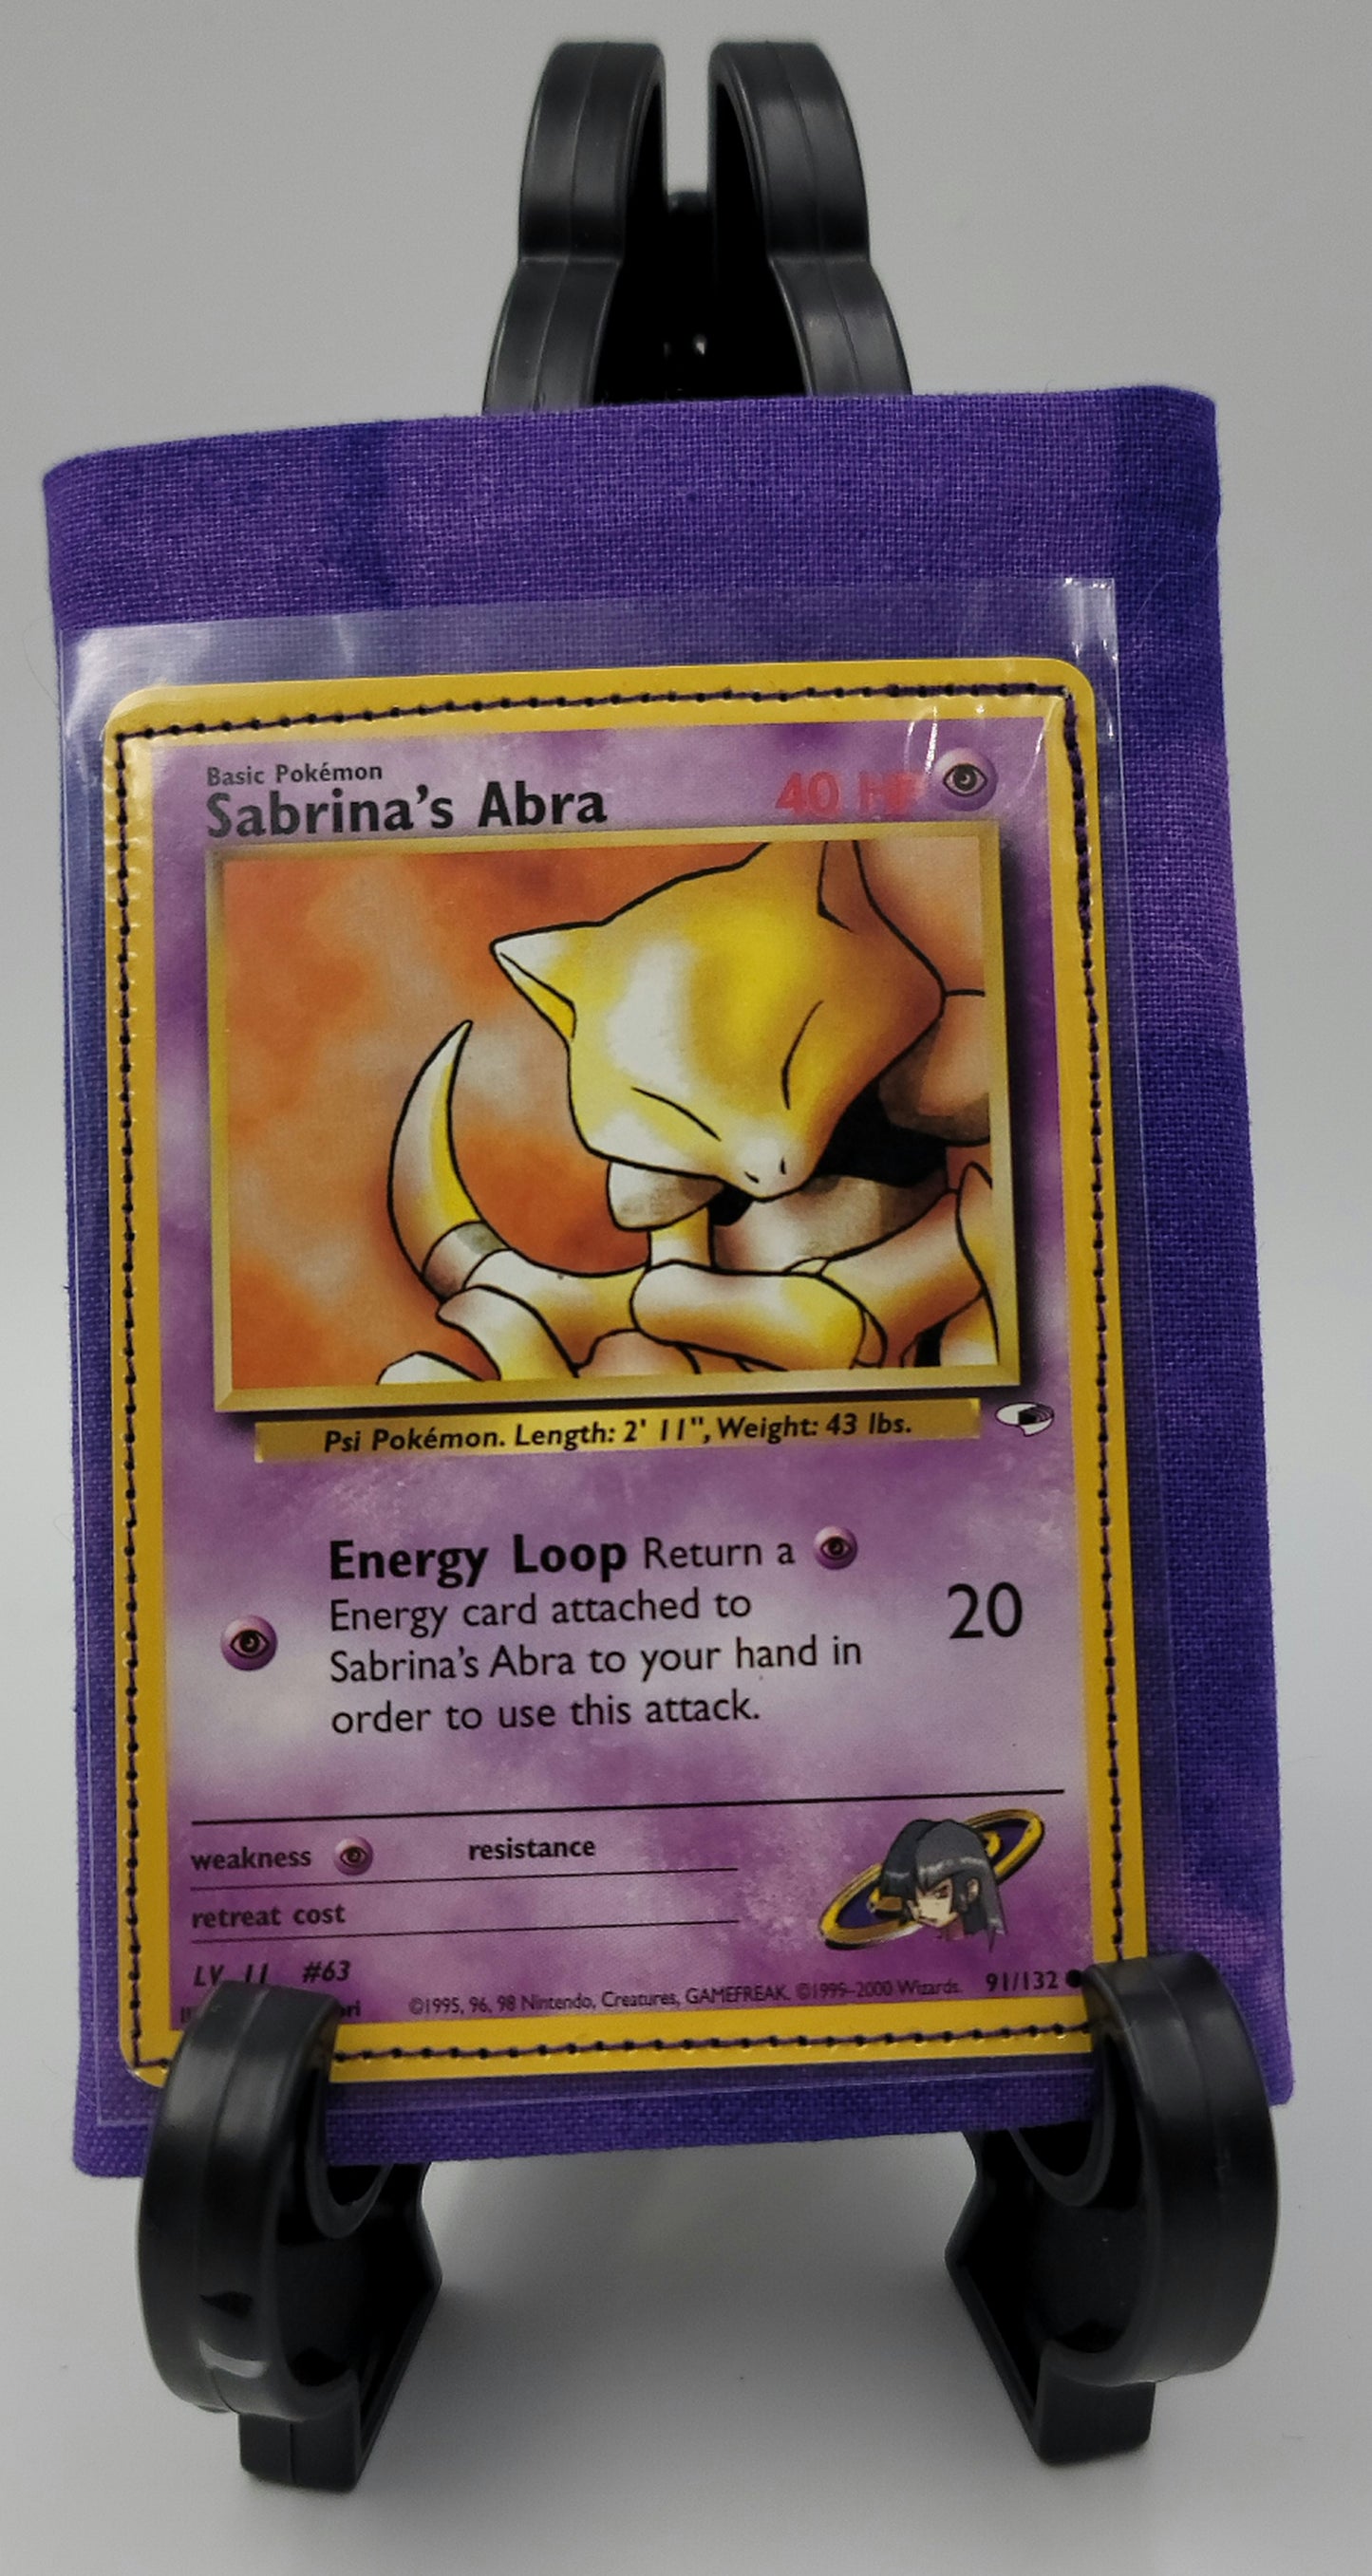 Handmade Sabrina's Abra and Sabrina's Gaze Pokemon card cloth wallet